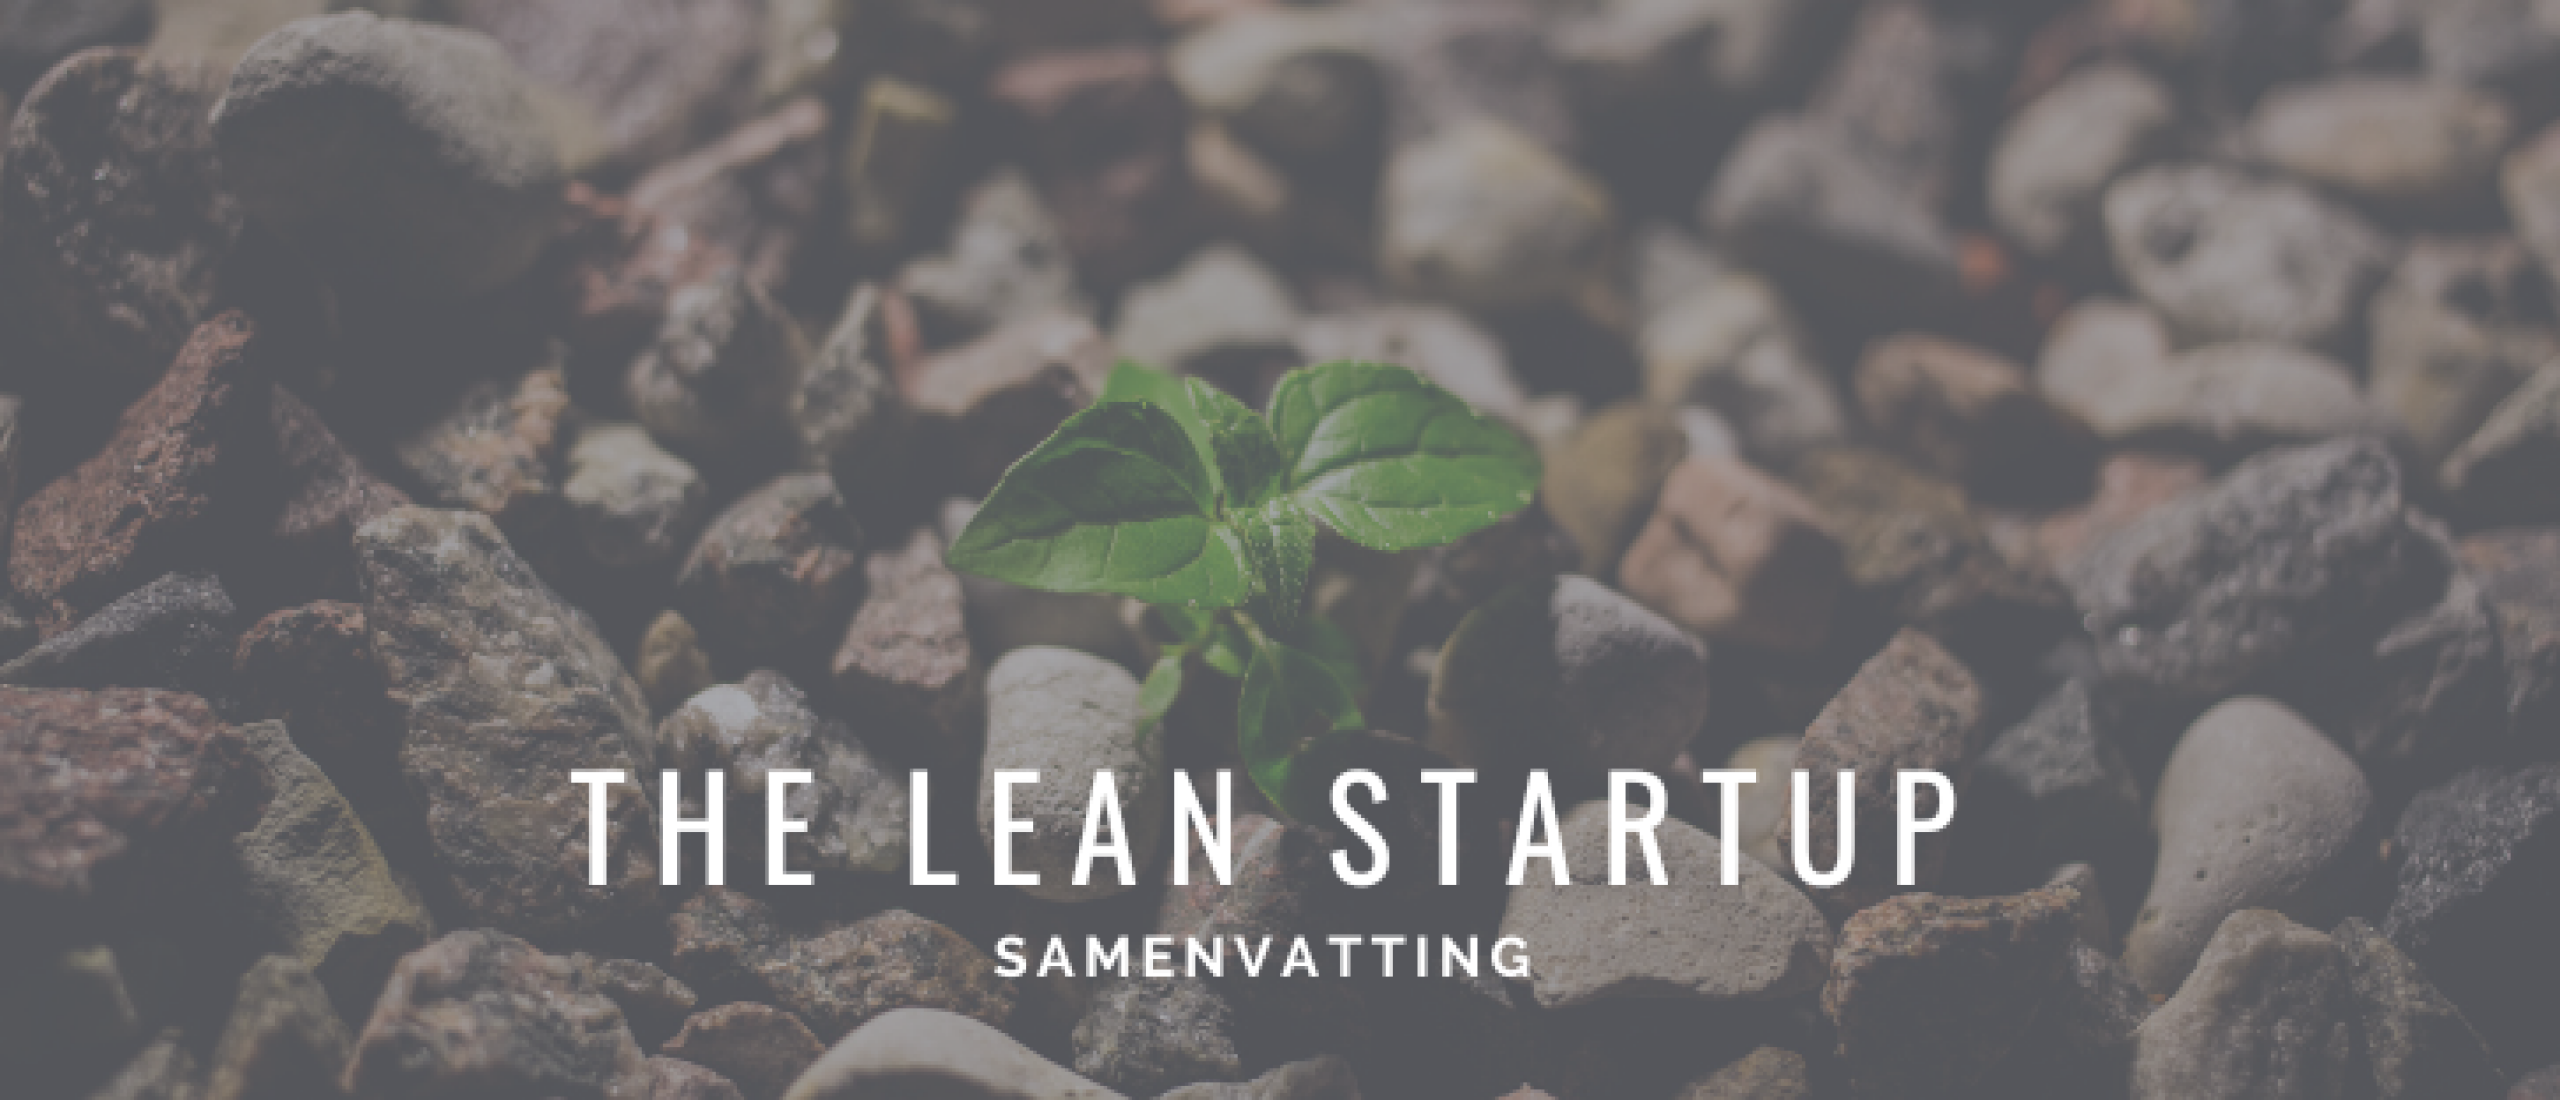 The Lean Startup Samenvattting | Happy Investors